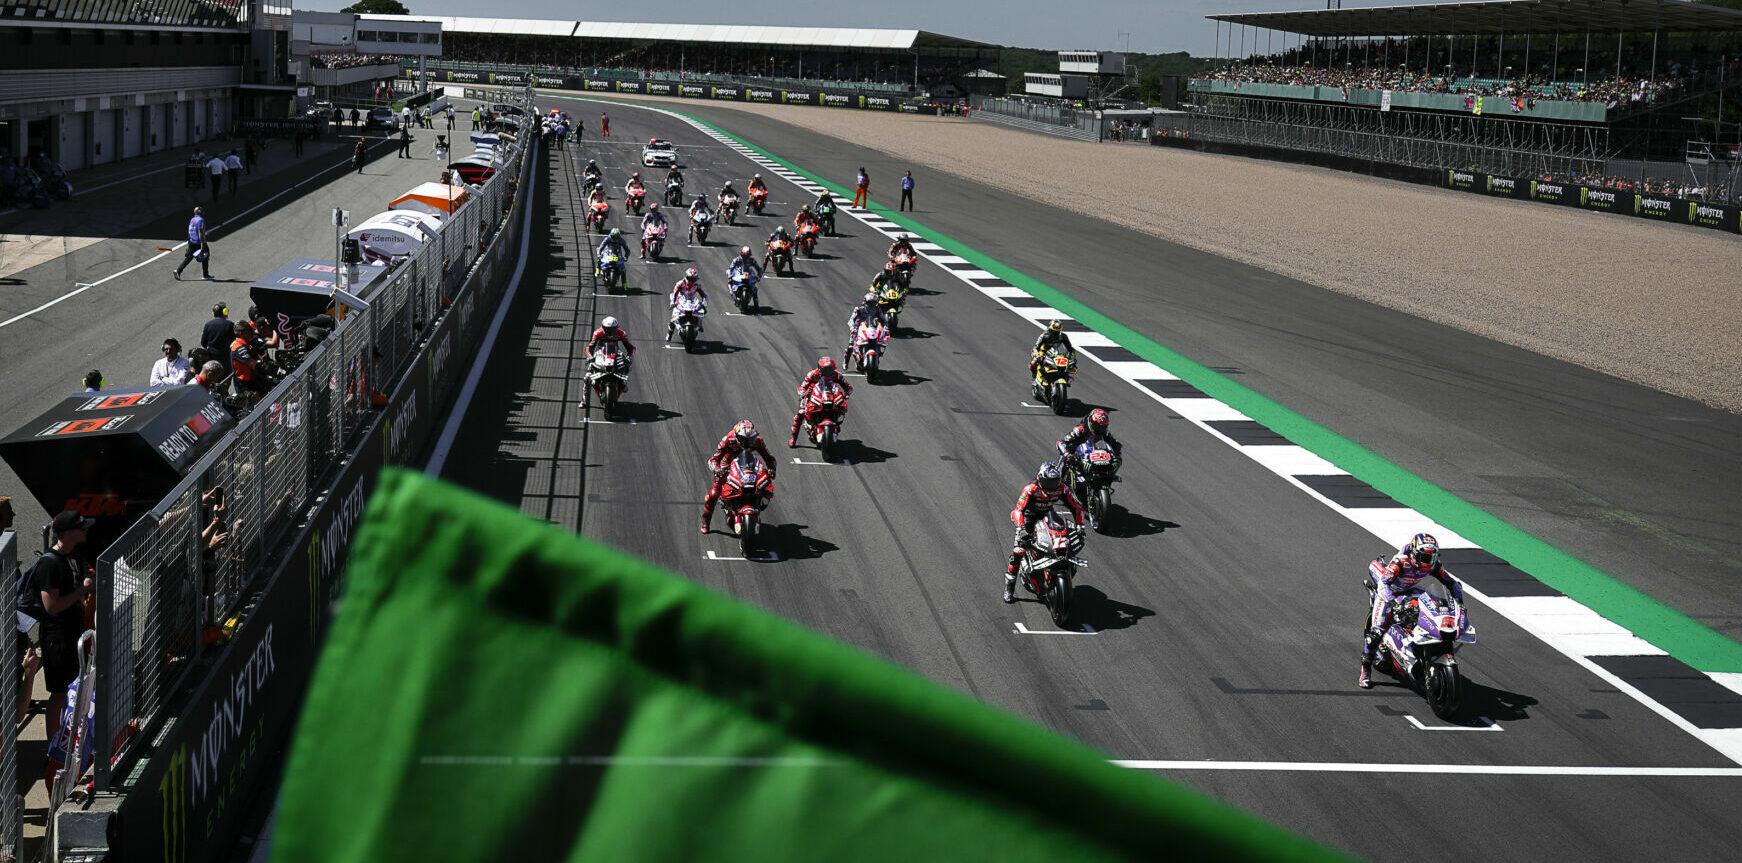 MotoGP World Championship Returns To Action At Silverstone